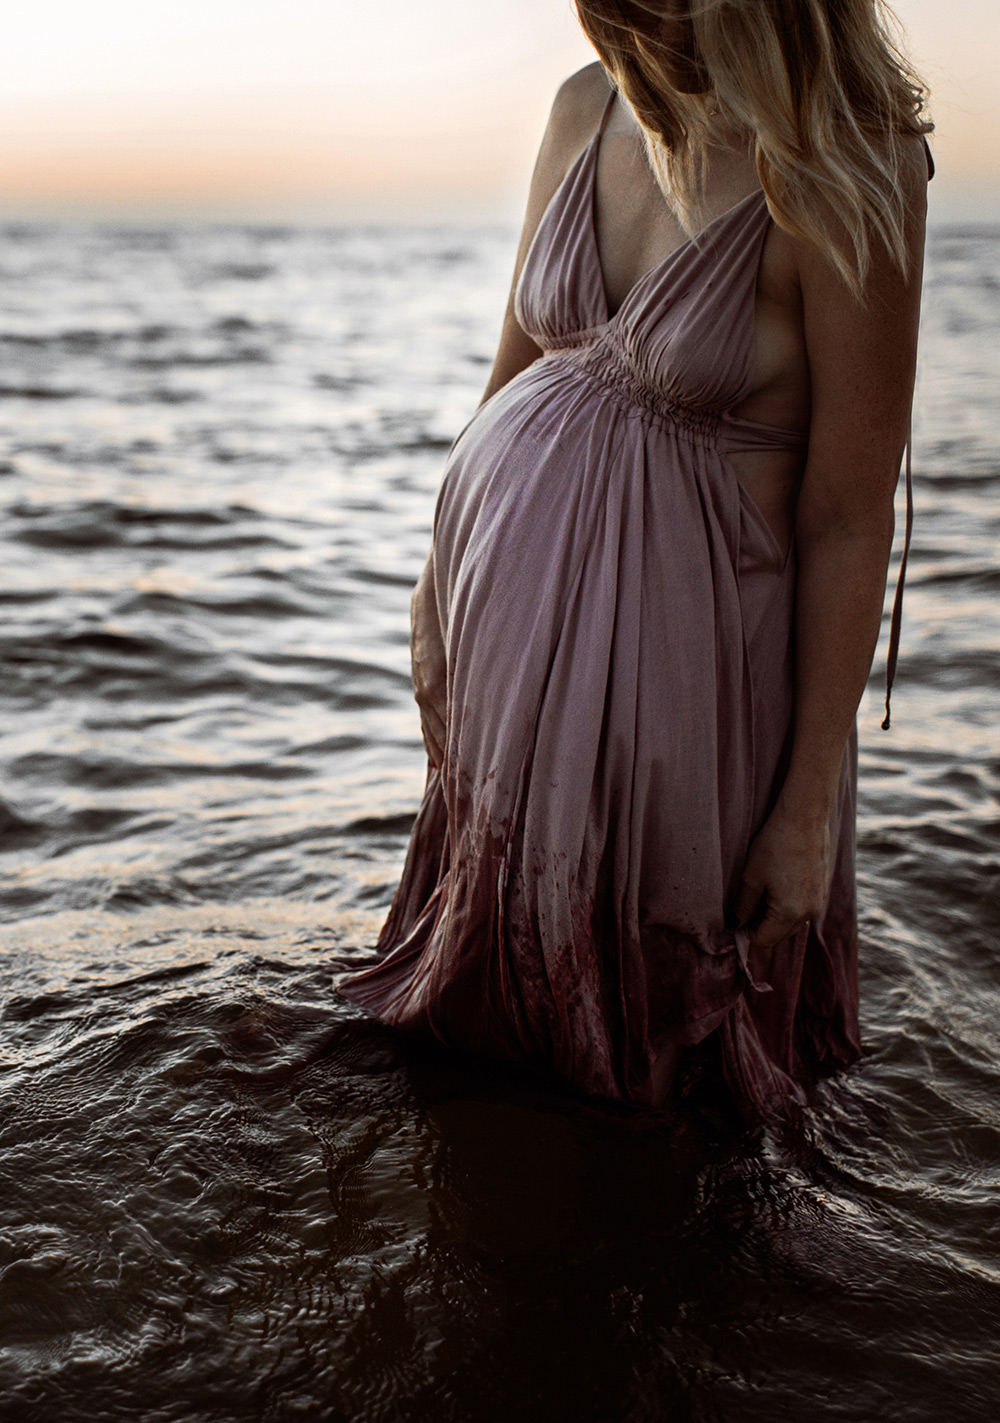 Sunset maternity photos in Florida